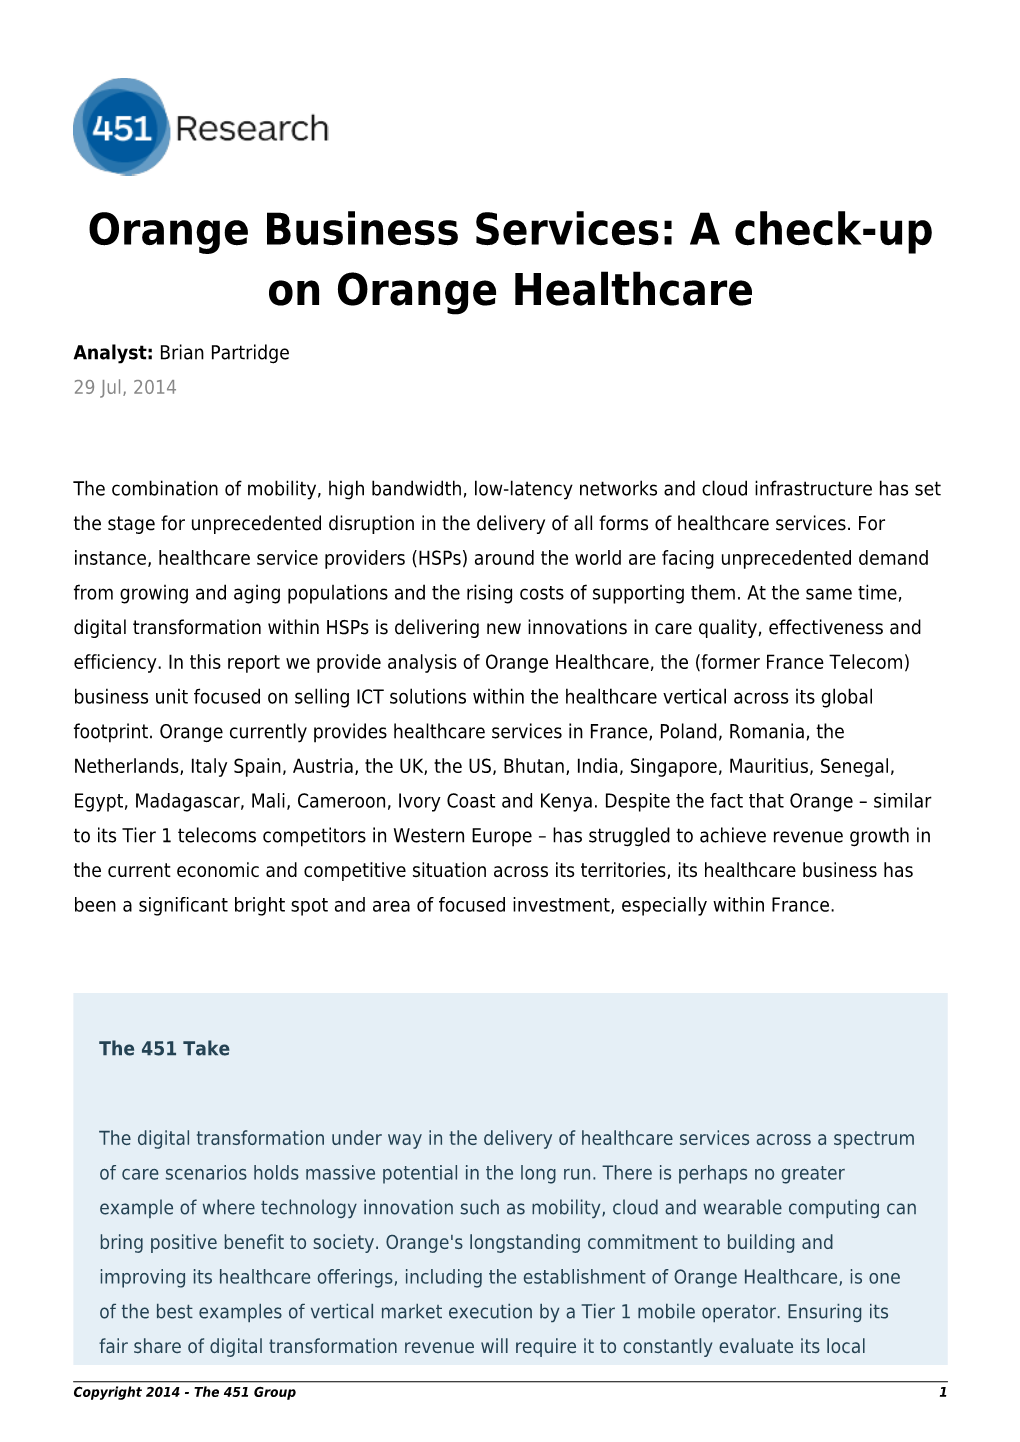 Orange Business Services: a Check-Up on Orange Healthcare